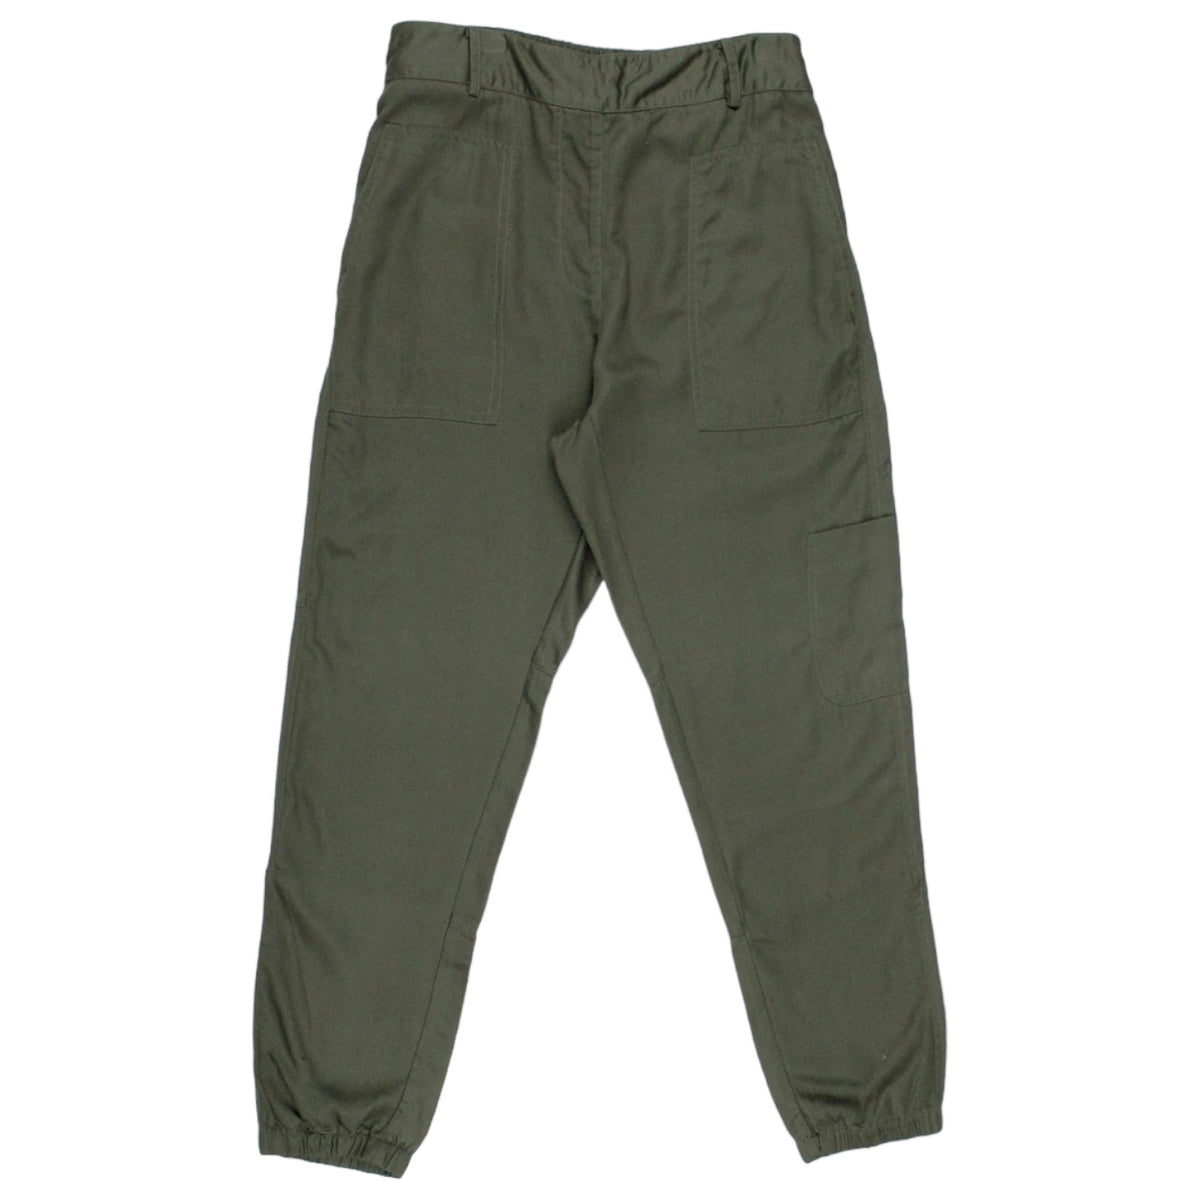 NRBY Khaki Cargo Pants - Sample